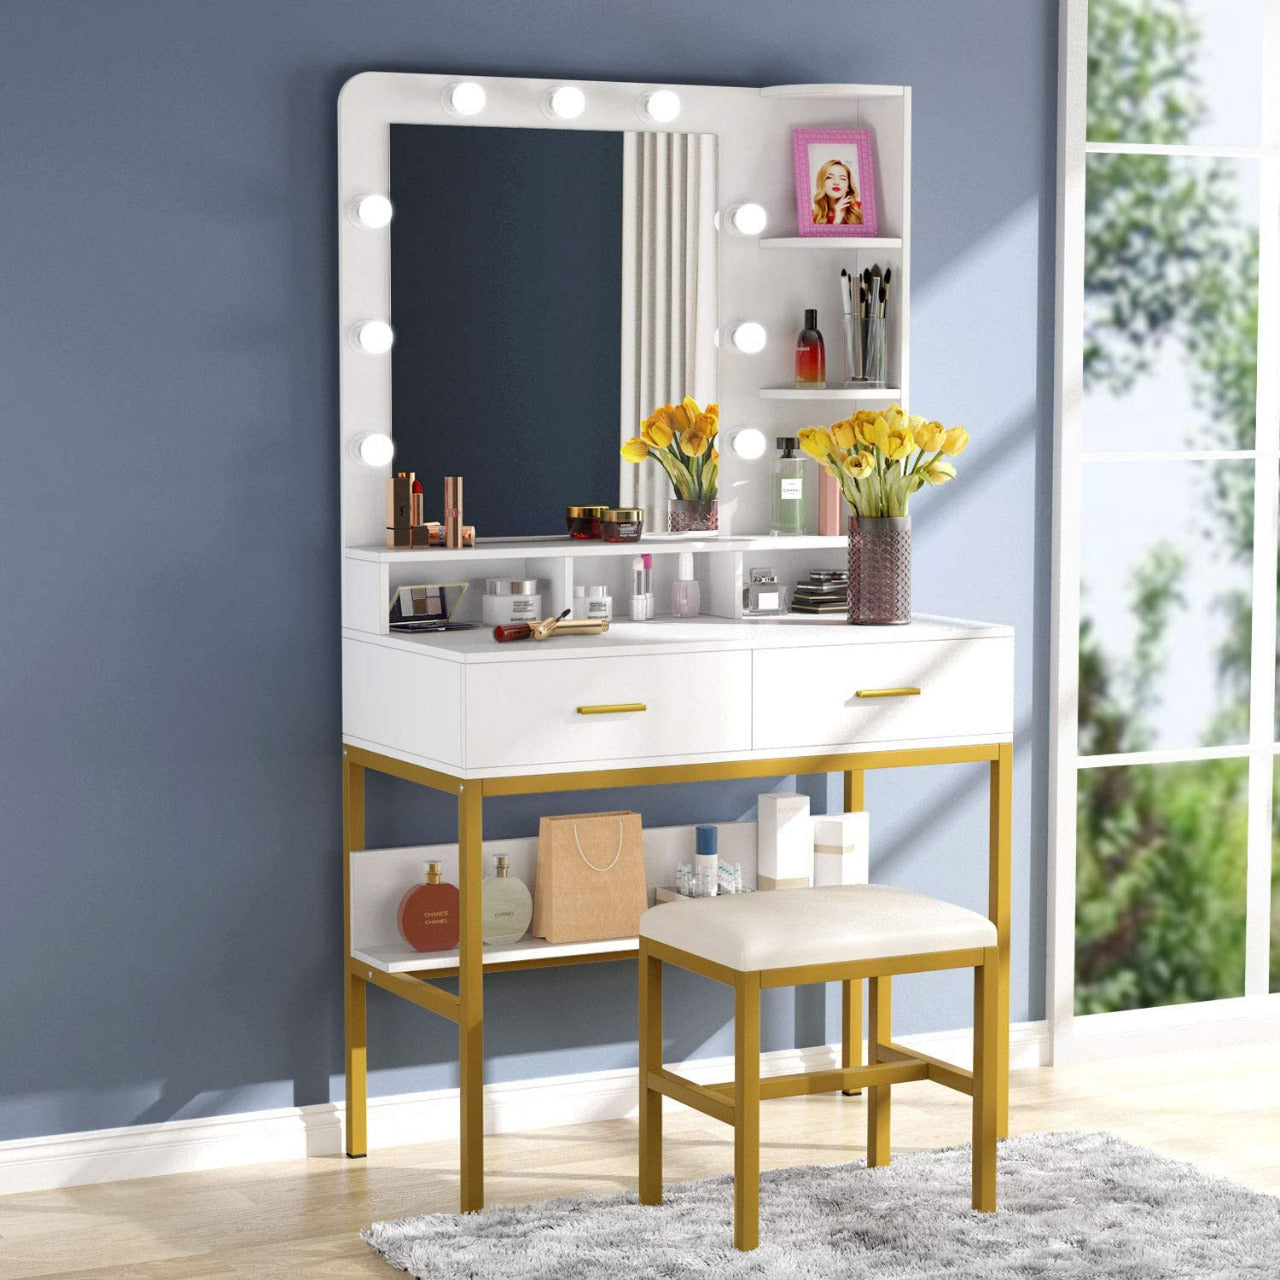 Dressing Tables: Buy Wooden Dressing Table Online in India At Best Price  [100+ Design] | Modern dressing table designs, Dressing table storage, Dressing  table design